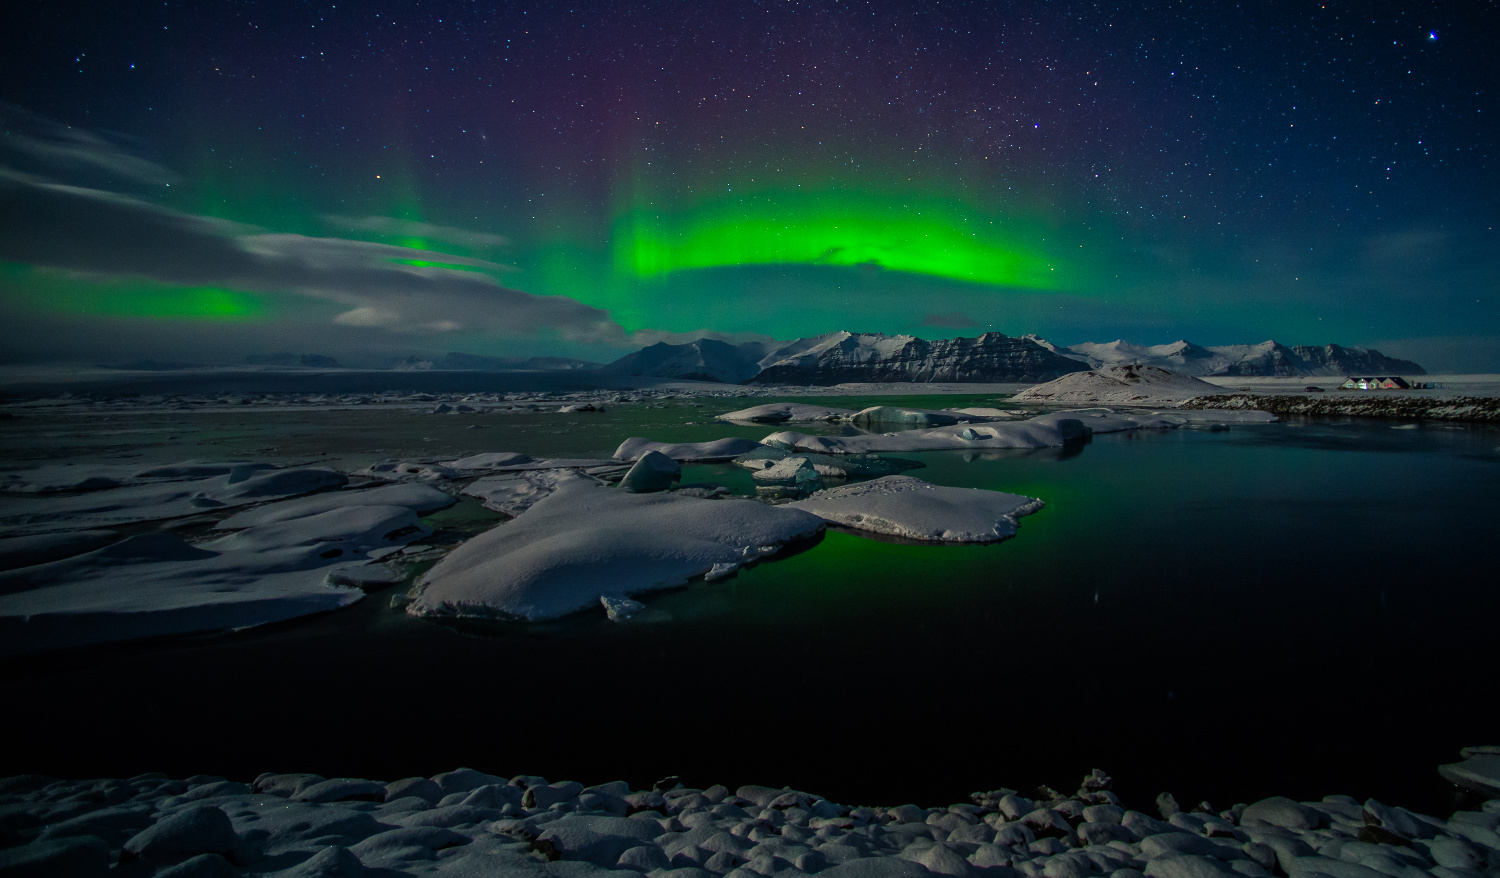 aurora borealis is dancing over the Jokulsarlon